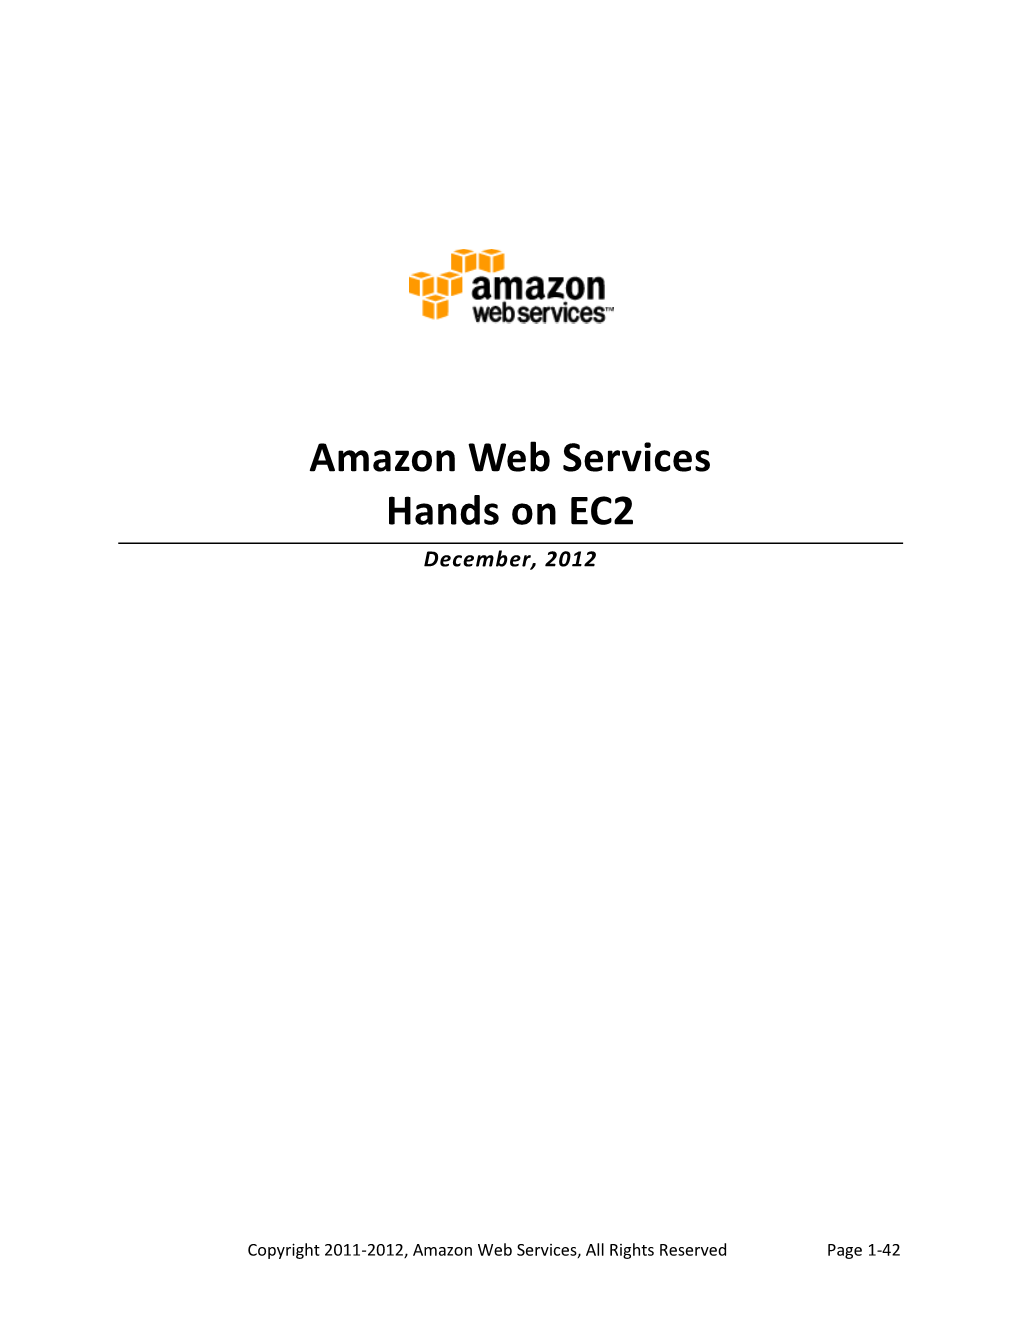 Amazon Web Services Hands on EC2 December, 2012